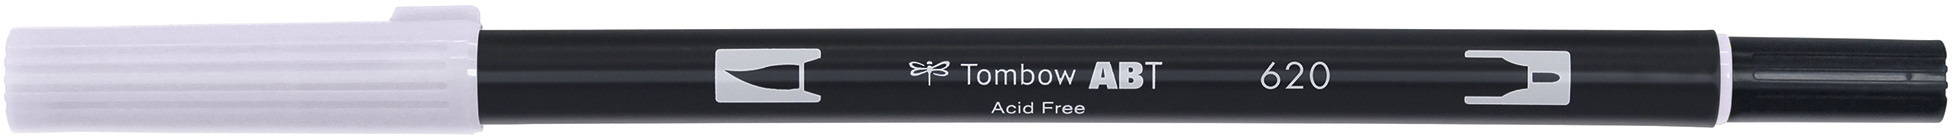 TOMBOW Dual Brush Pen ABT 620 mauve